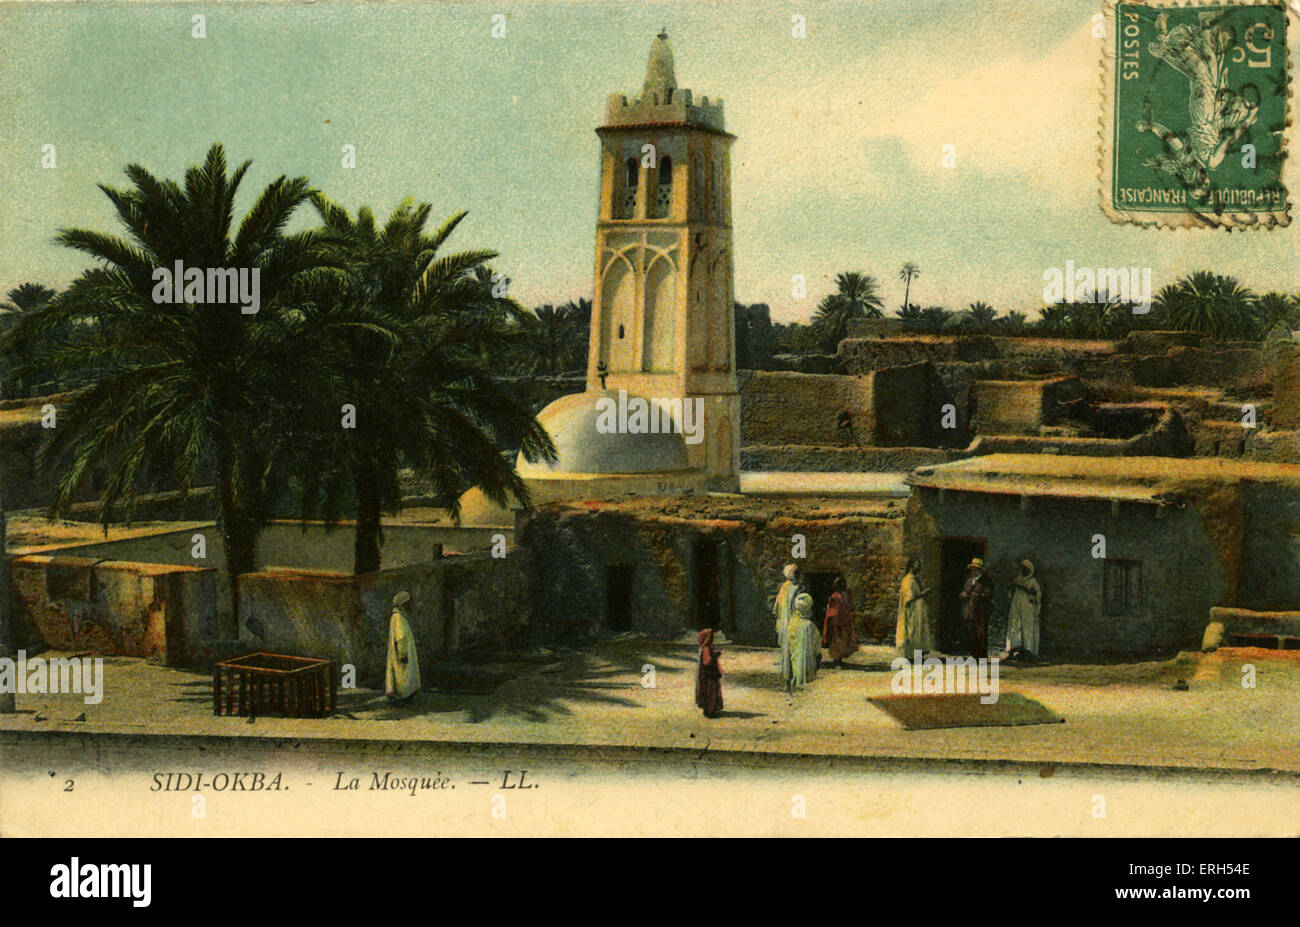 Sidi Okba, Algeria: La Mosquee (Mosque).Postage  Stamp on front. Postcard. Stock Photo